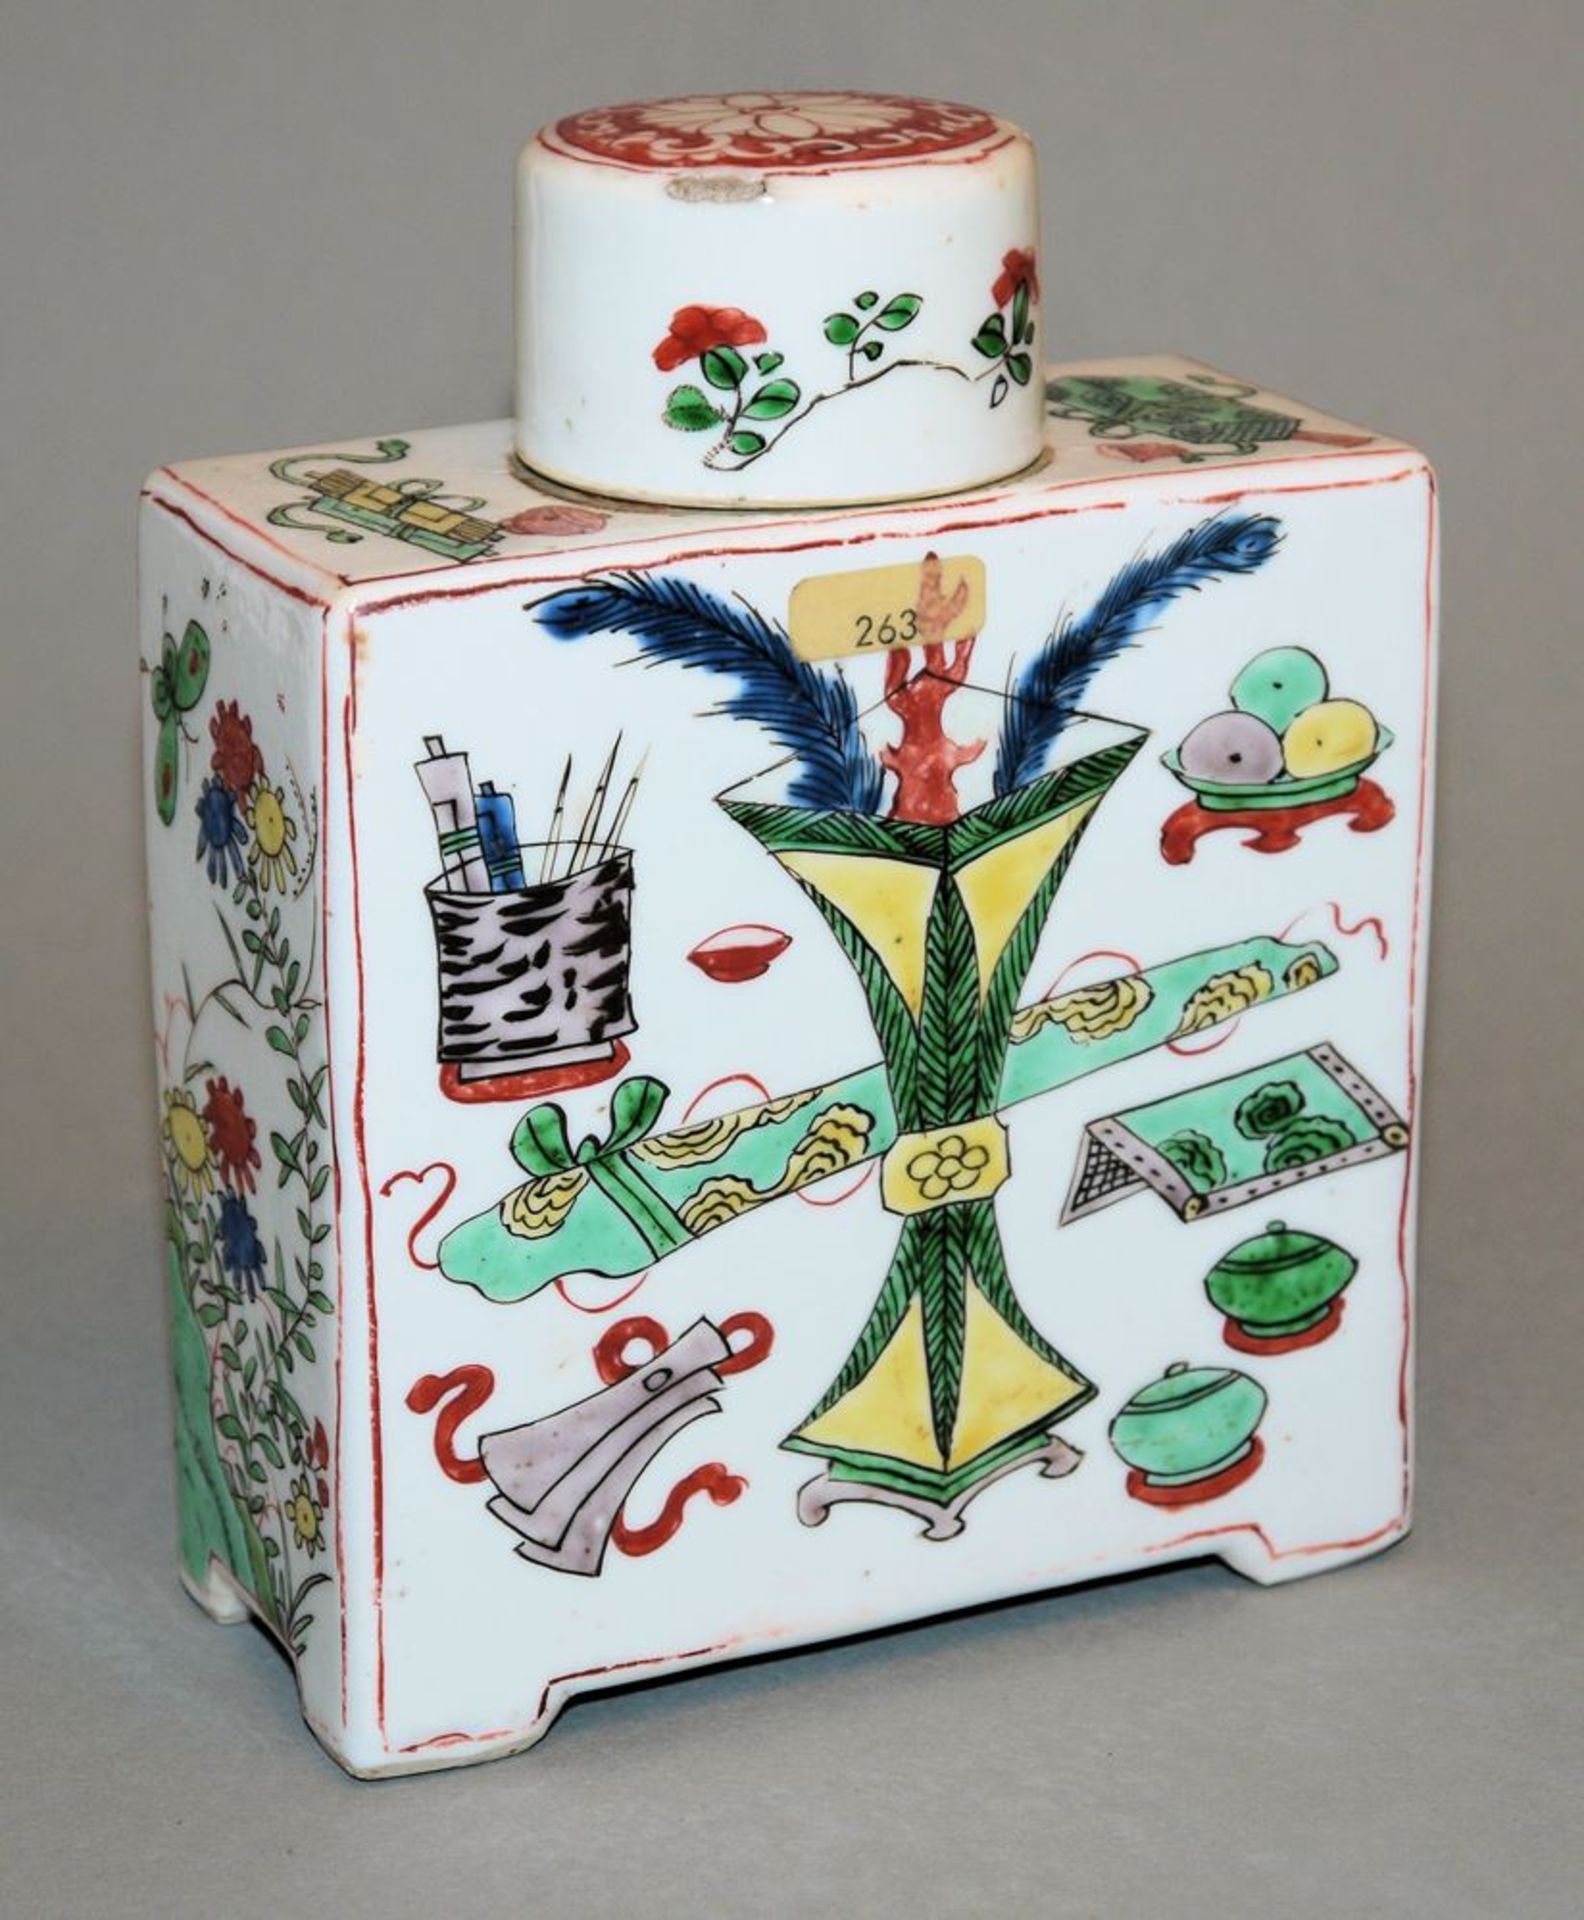 Wucai-Teedose mit Antiquitäten-Dekor, Qing-Zeit, China 18. Jh.